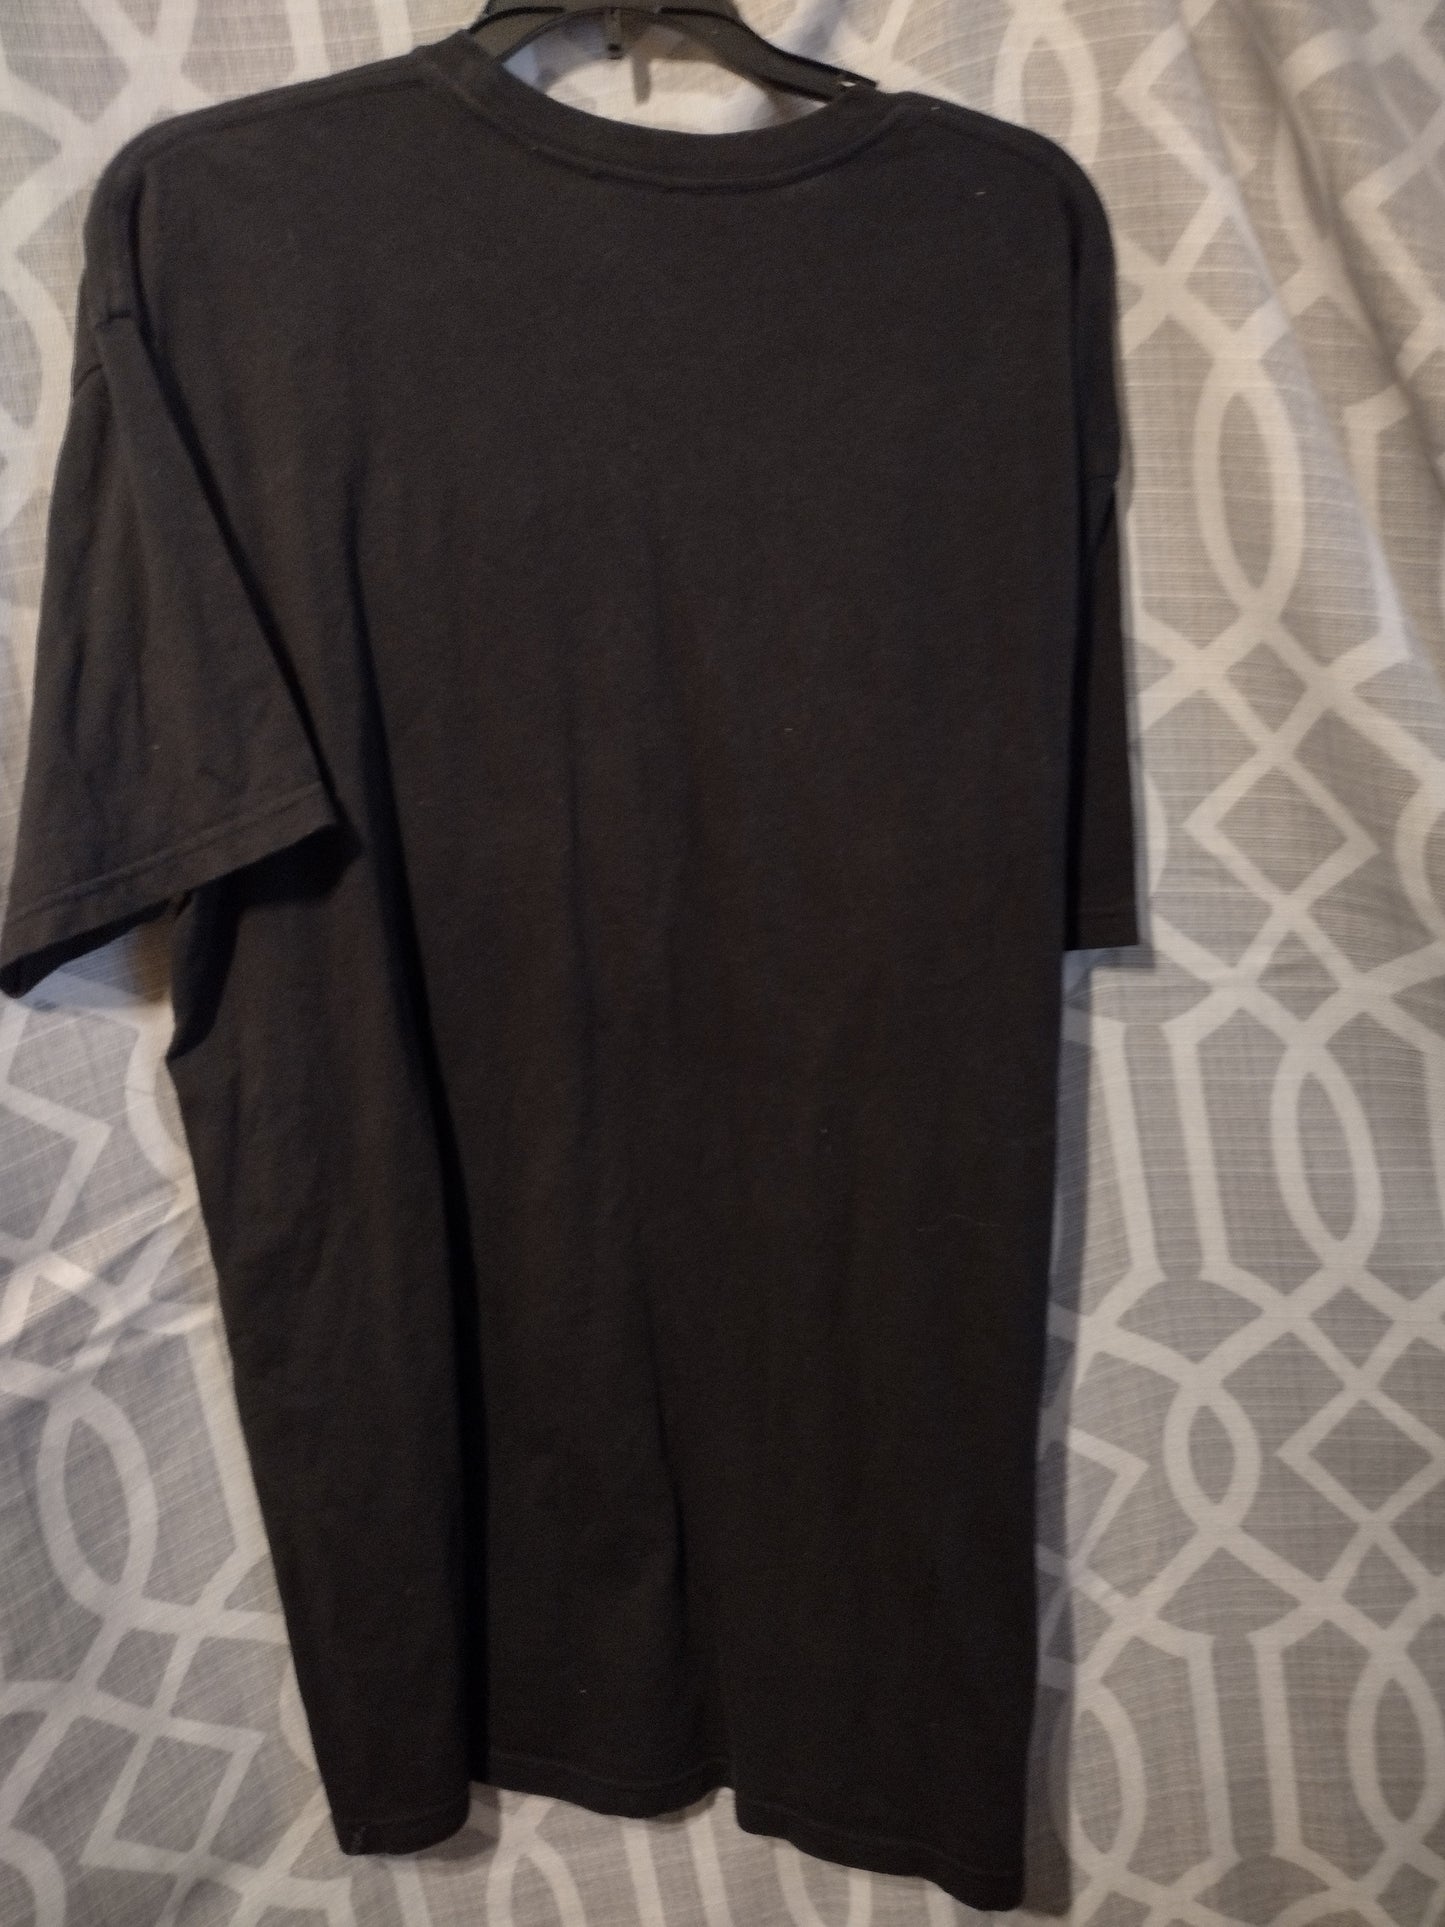 Unisex T-shirt size XL